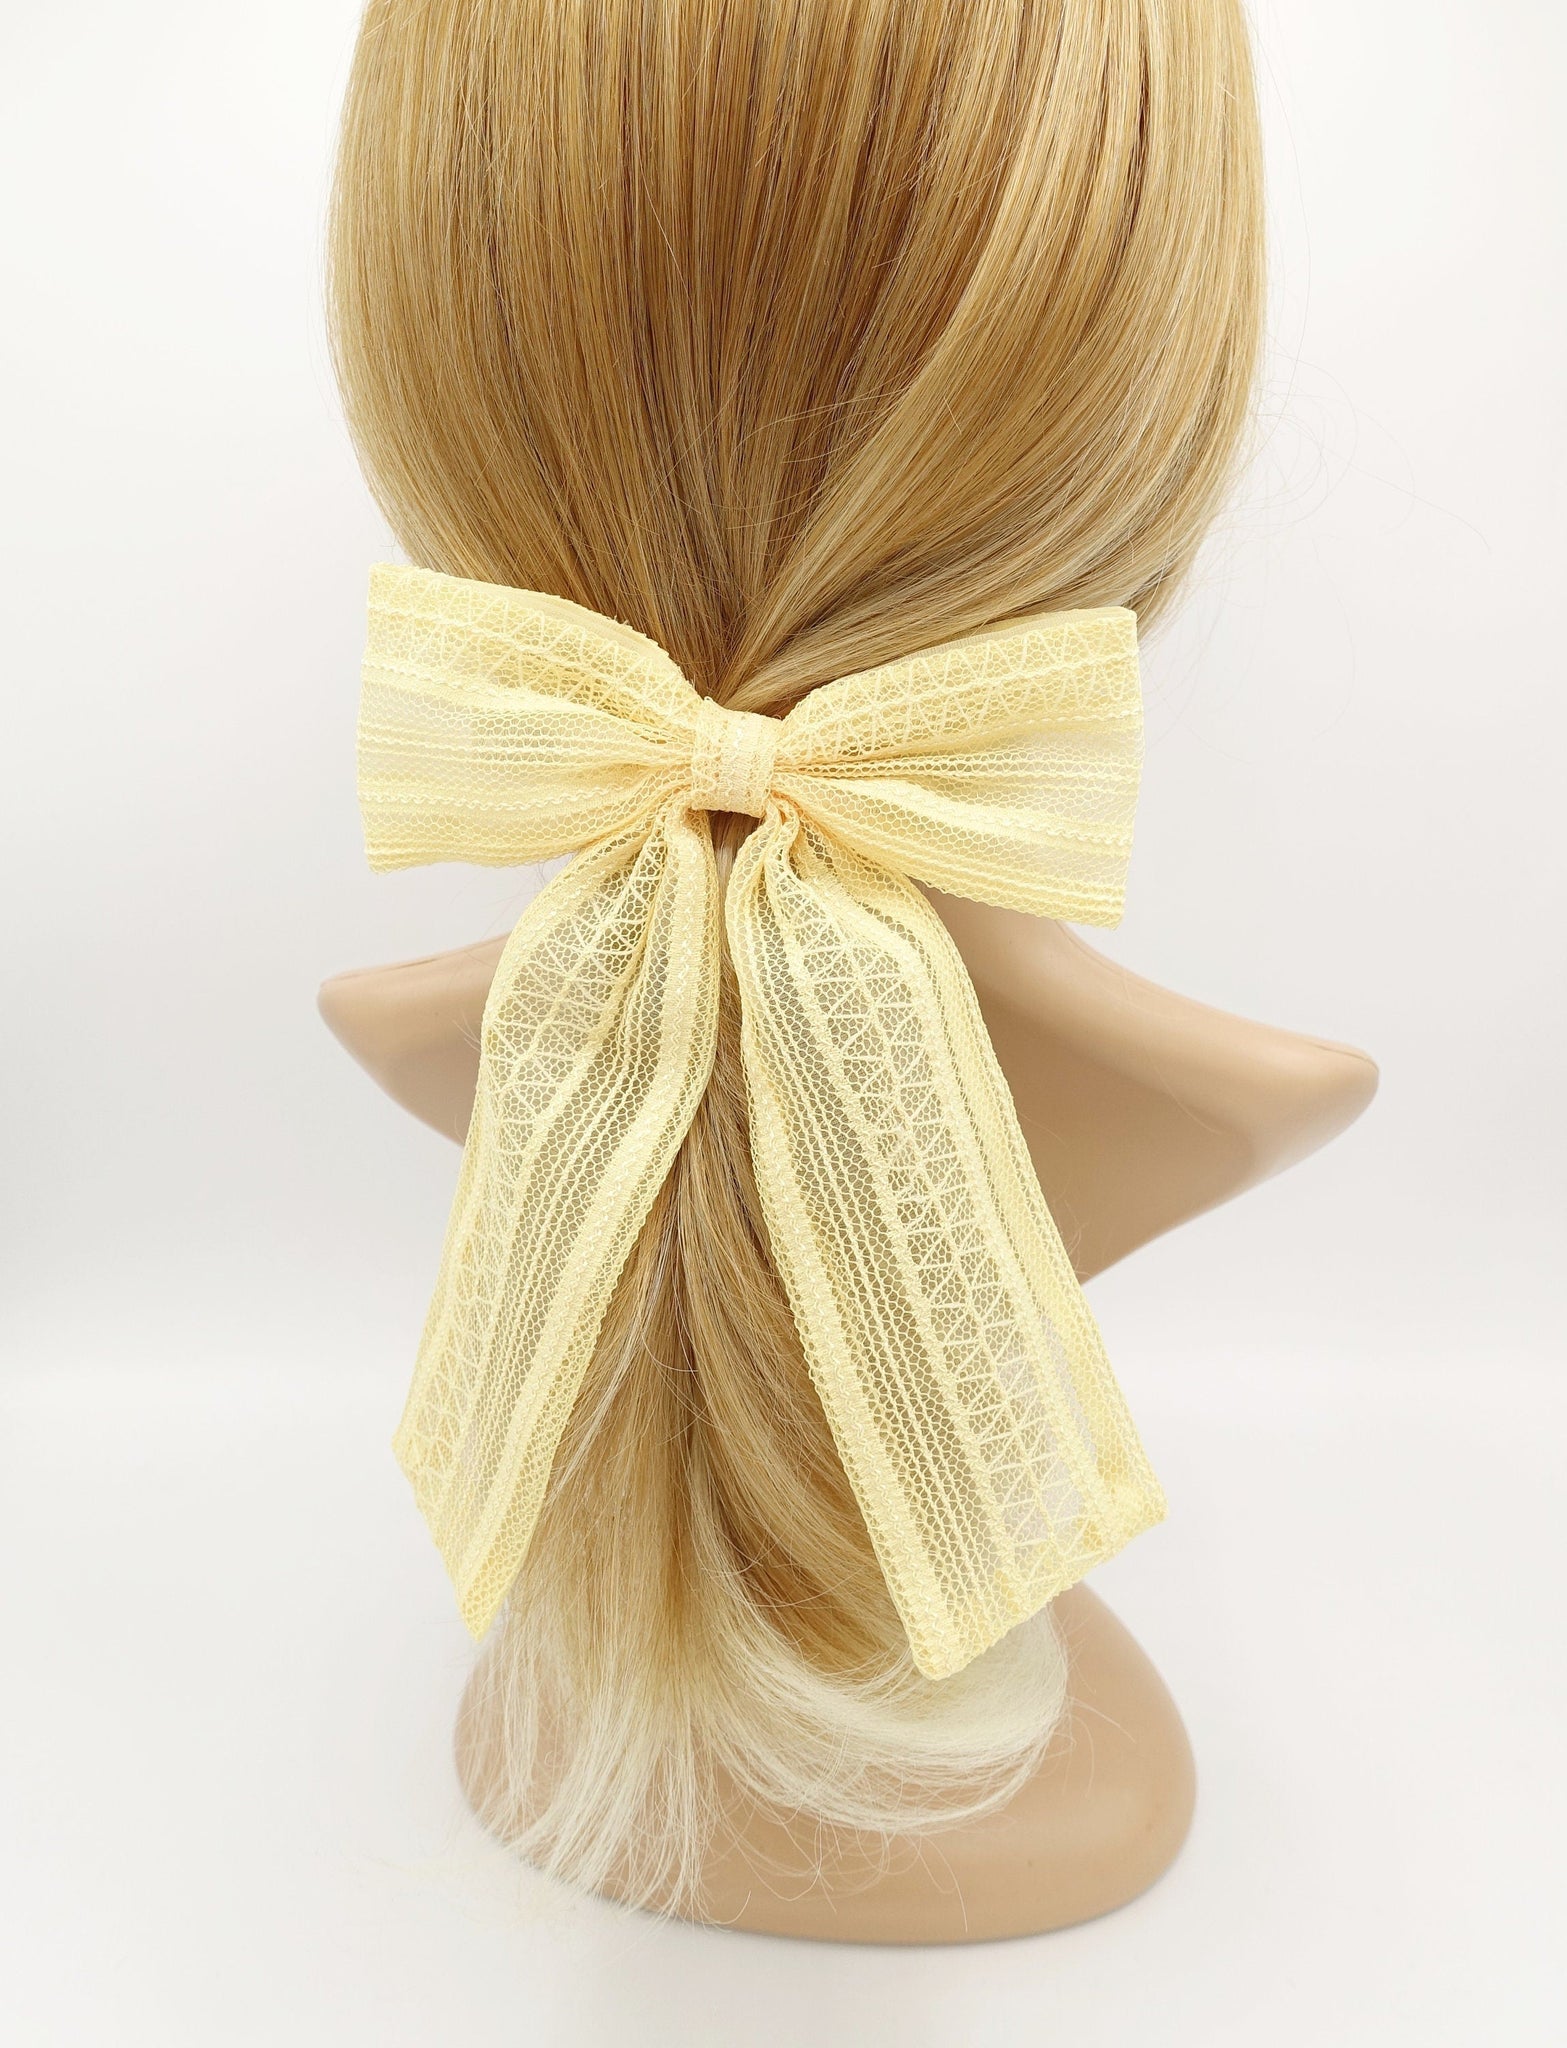 veryshine.com Barrette (Bow) Yellow mesh lace organza hair bow for women